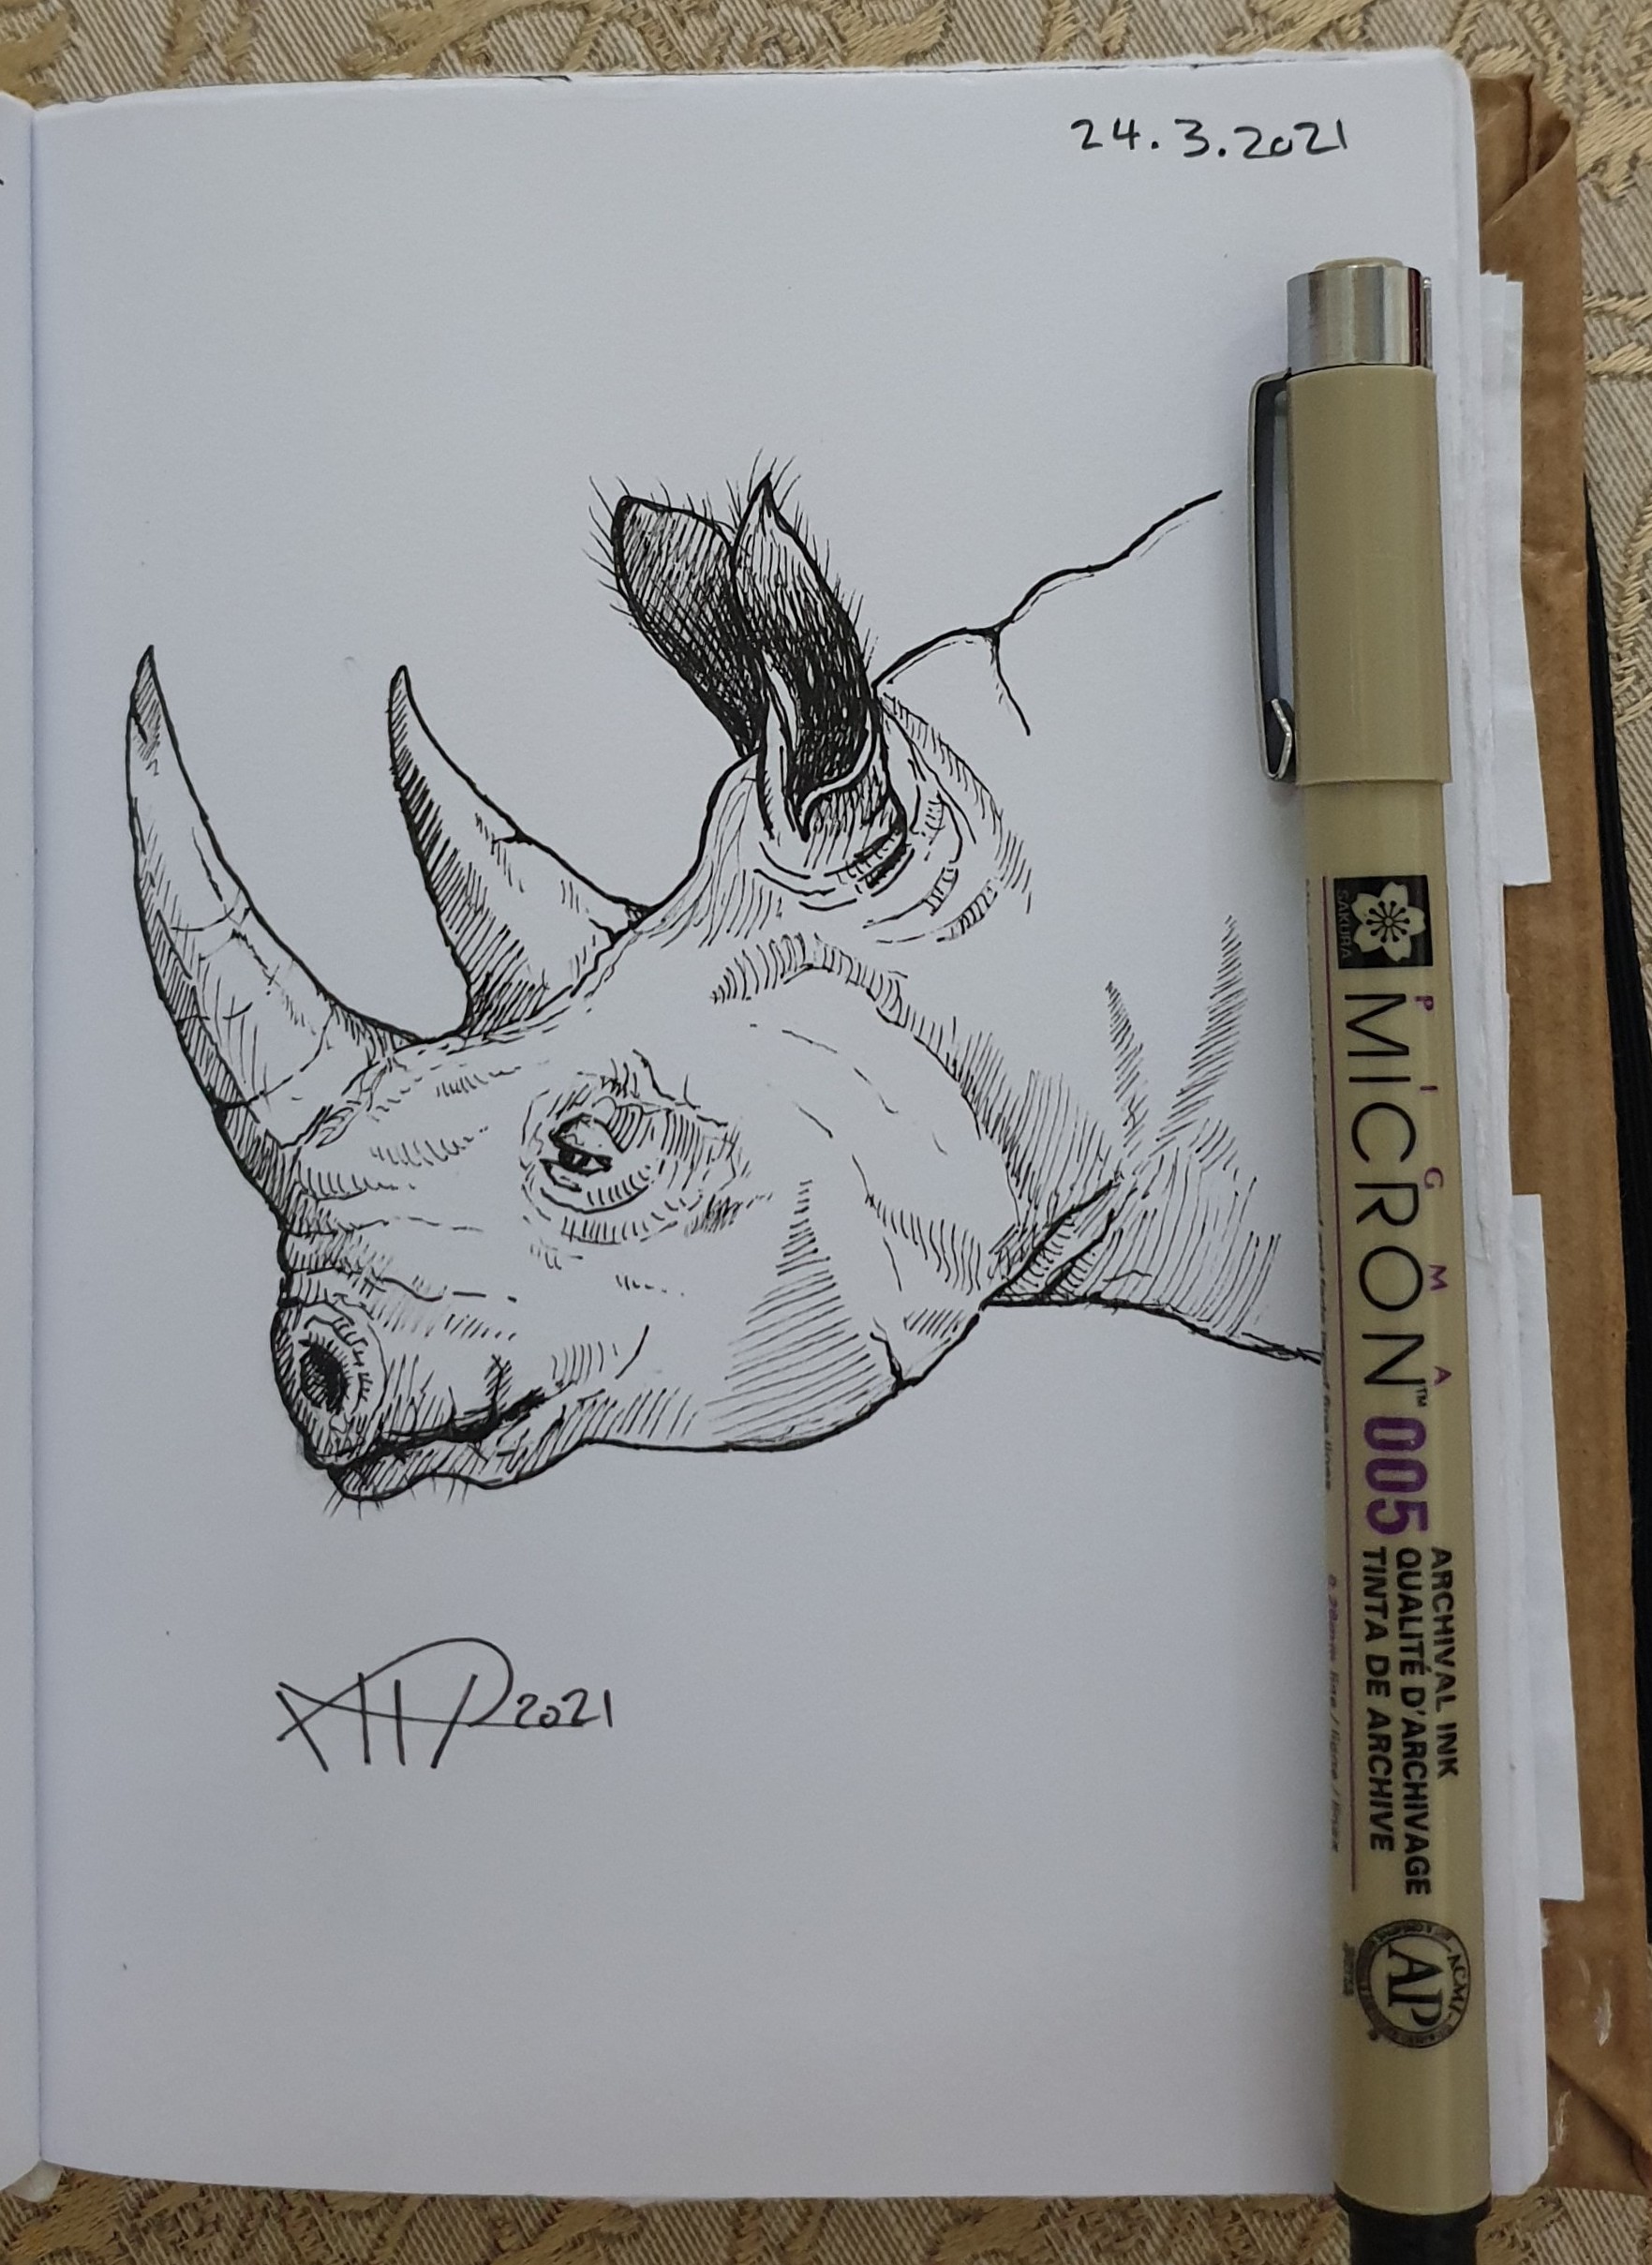 ali radwani sketchbook sketch rhion animal pencil black ink pen